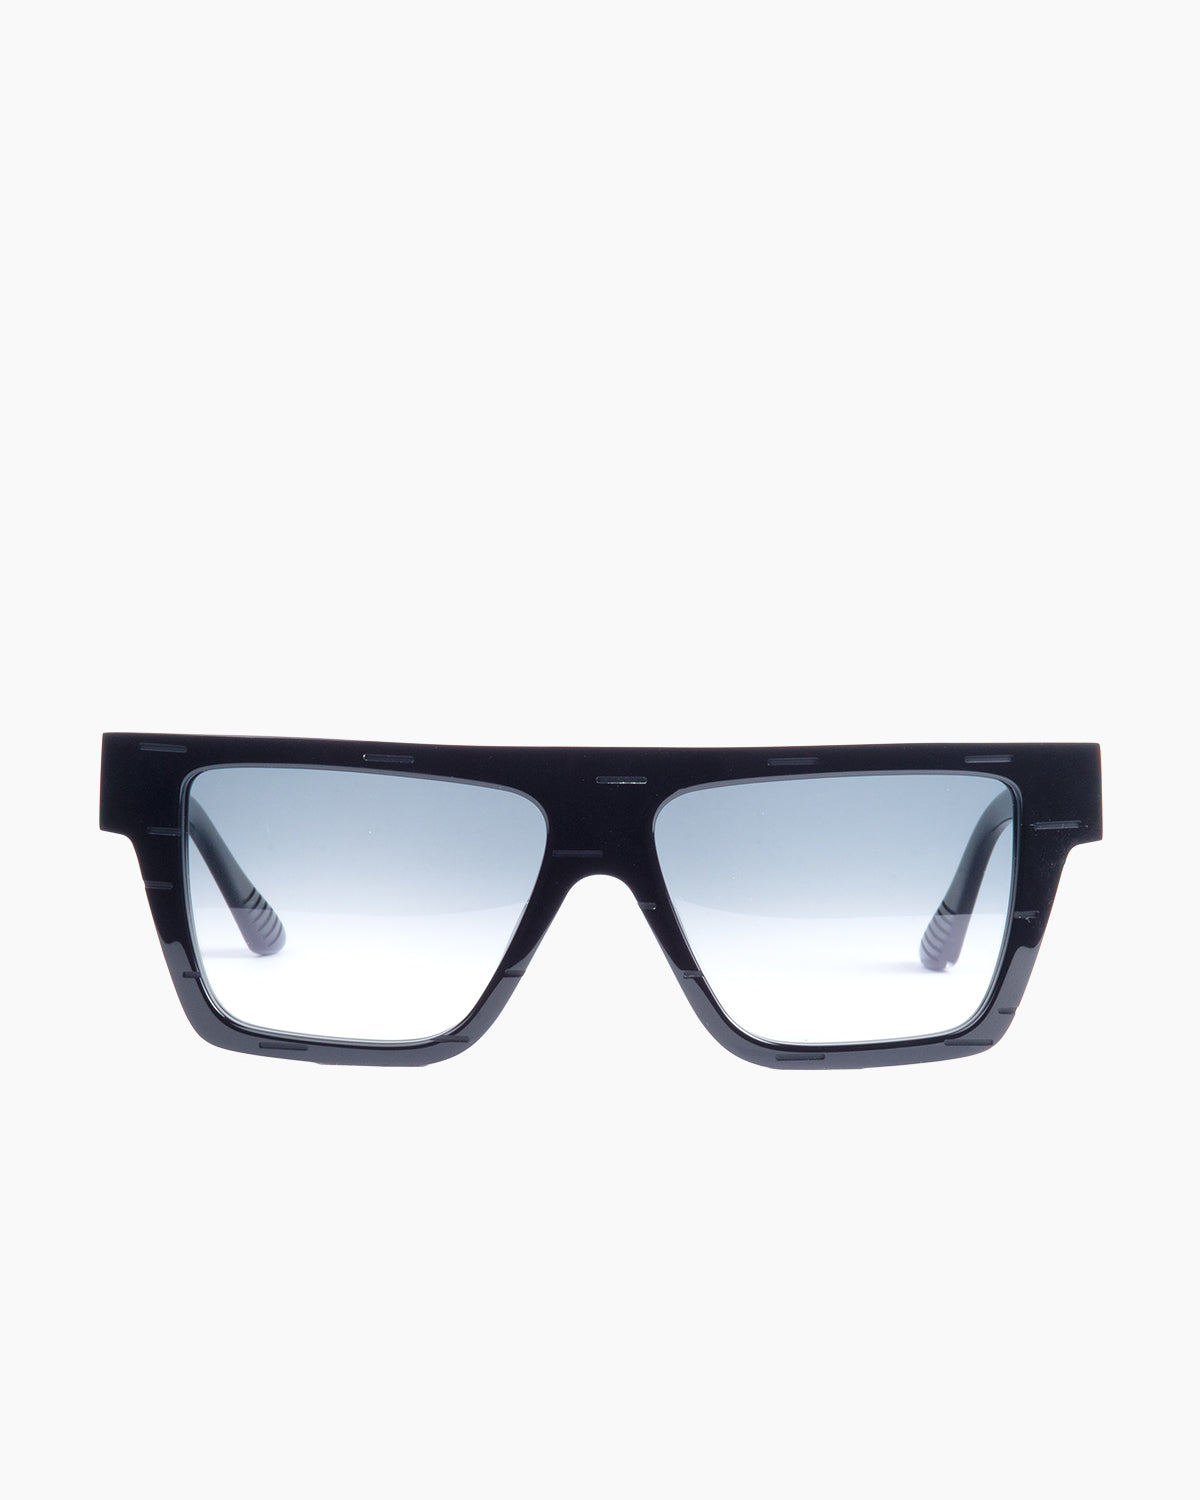 Yohji Yamamoto - Slook002 - A001 | Bar à lunettes:  Marie-Sophie Dion